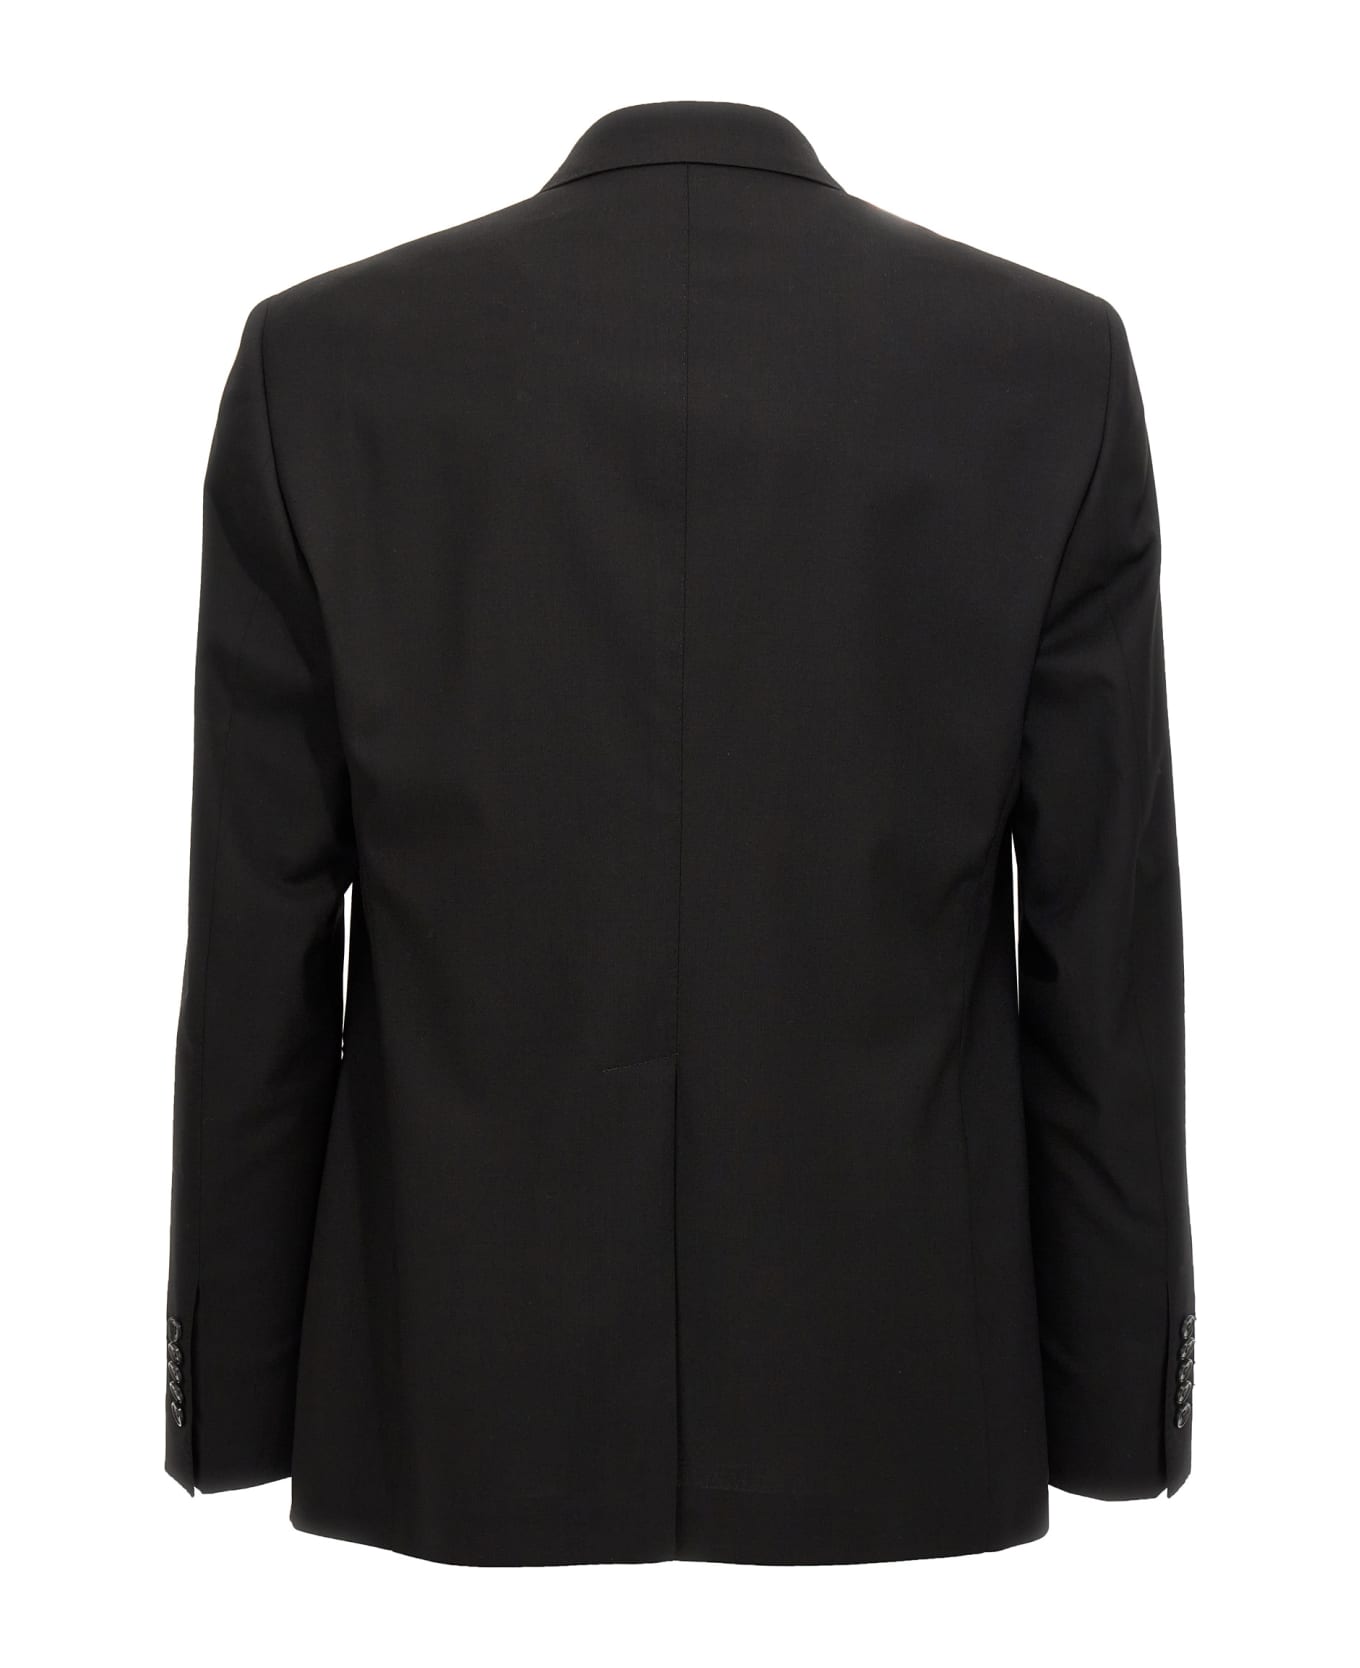 Tagliatore Stretch Wool Suit - Black   スーツ